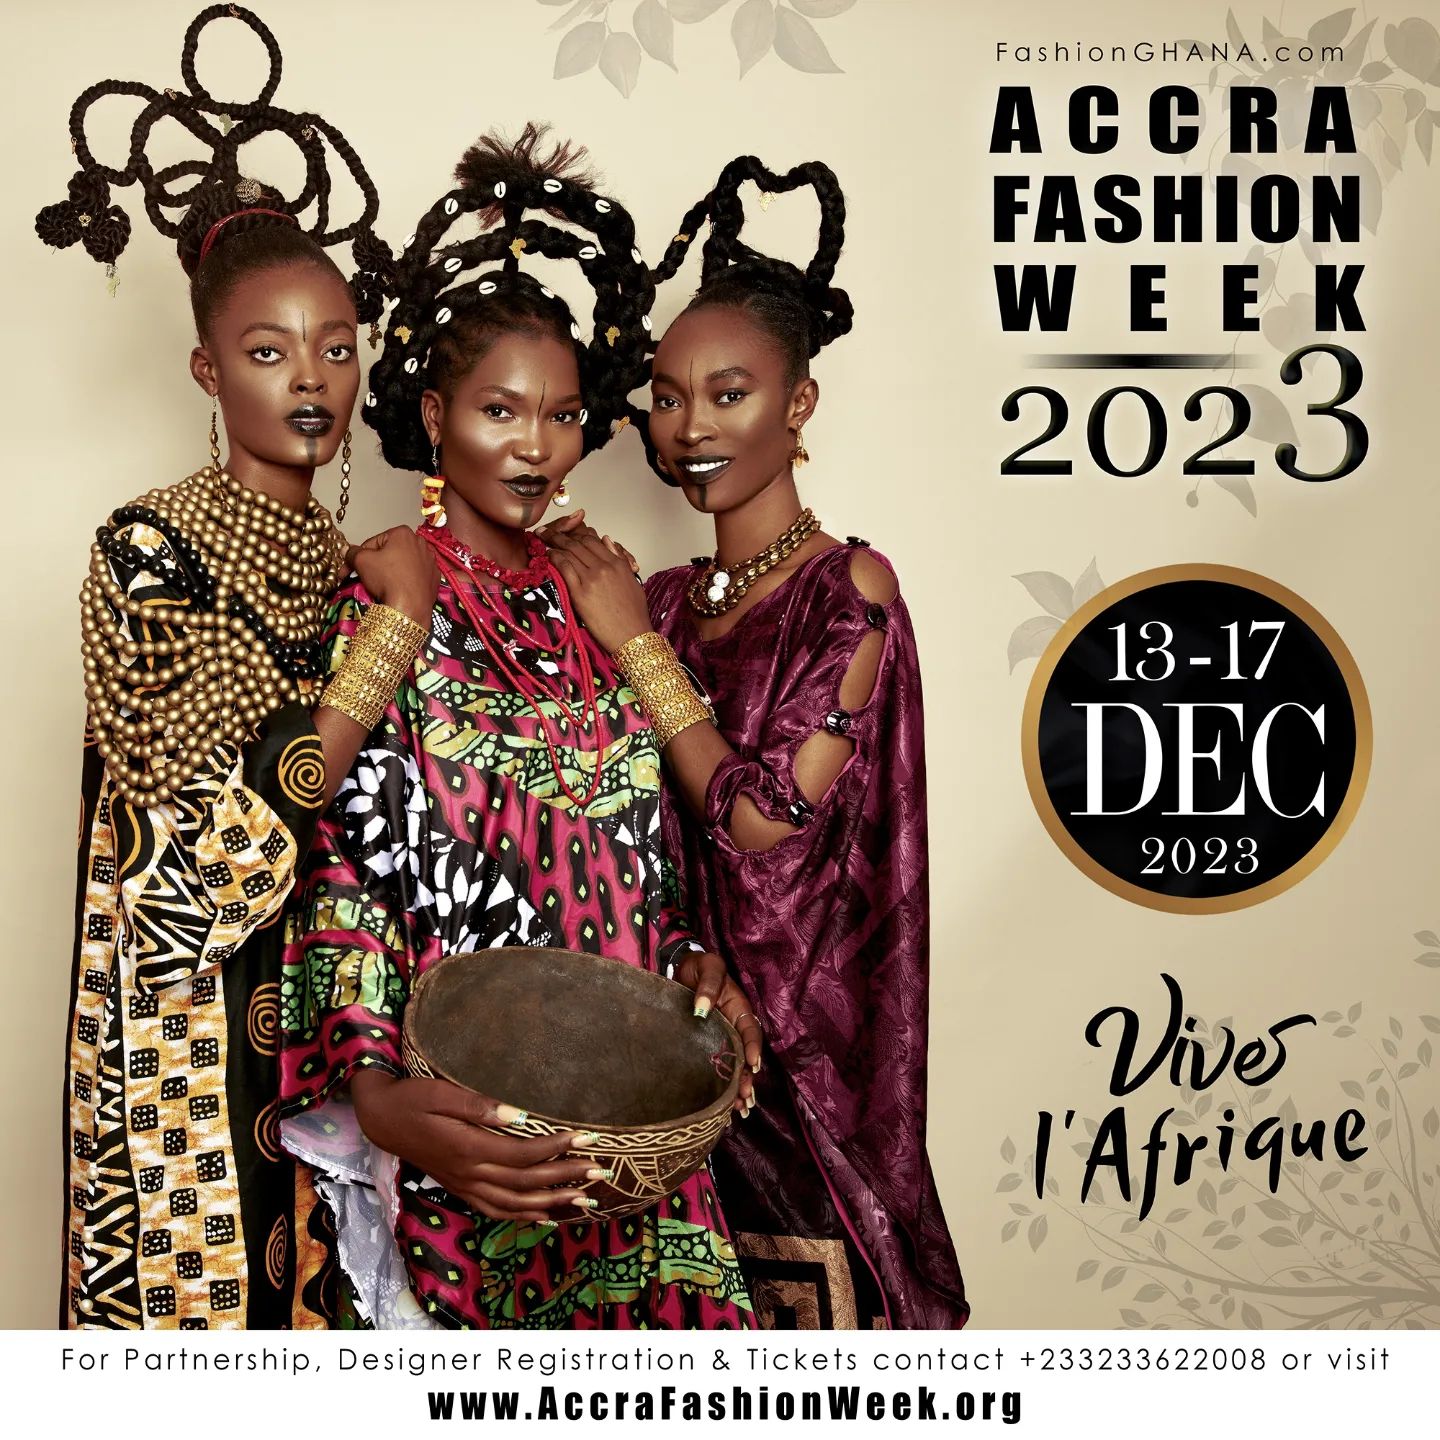 Accra Fashion Week 2023